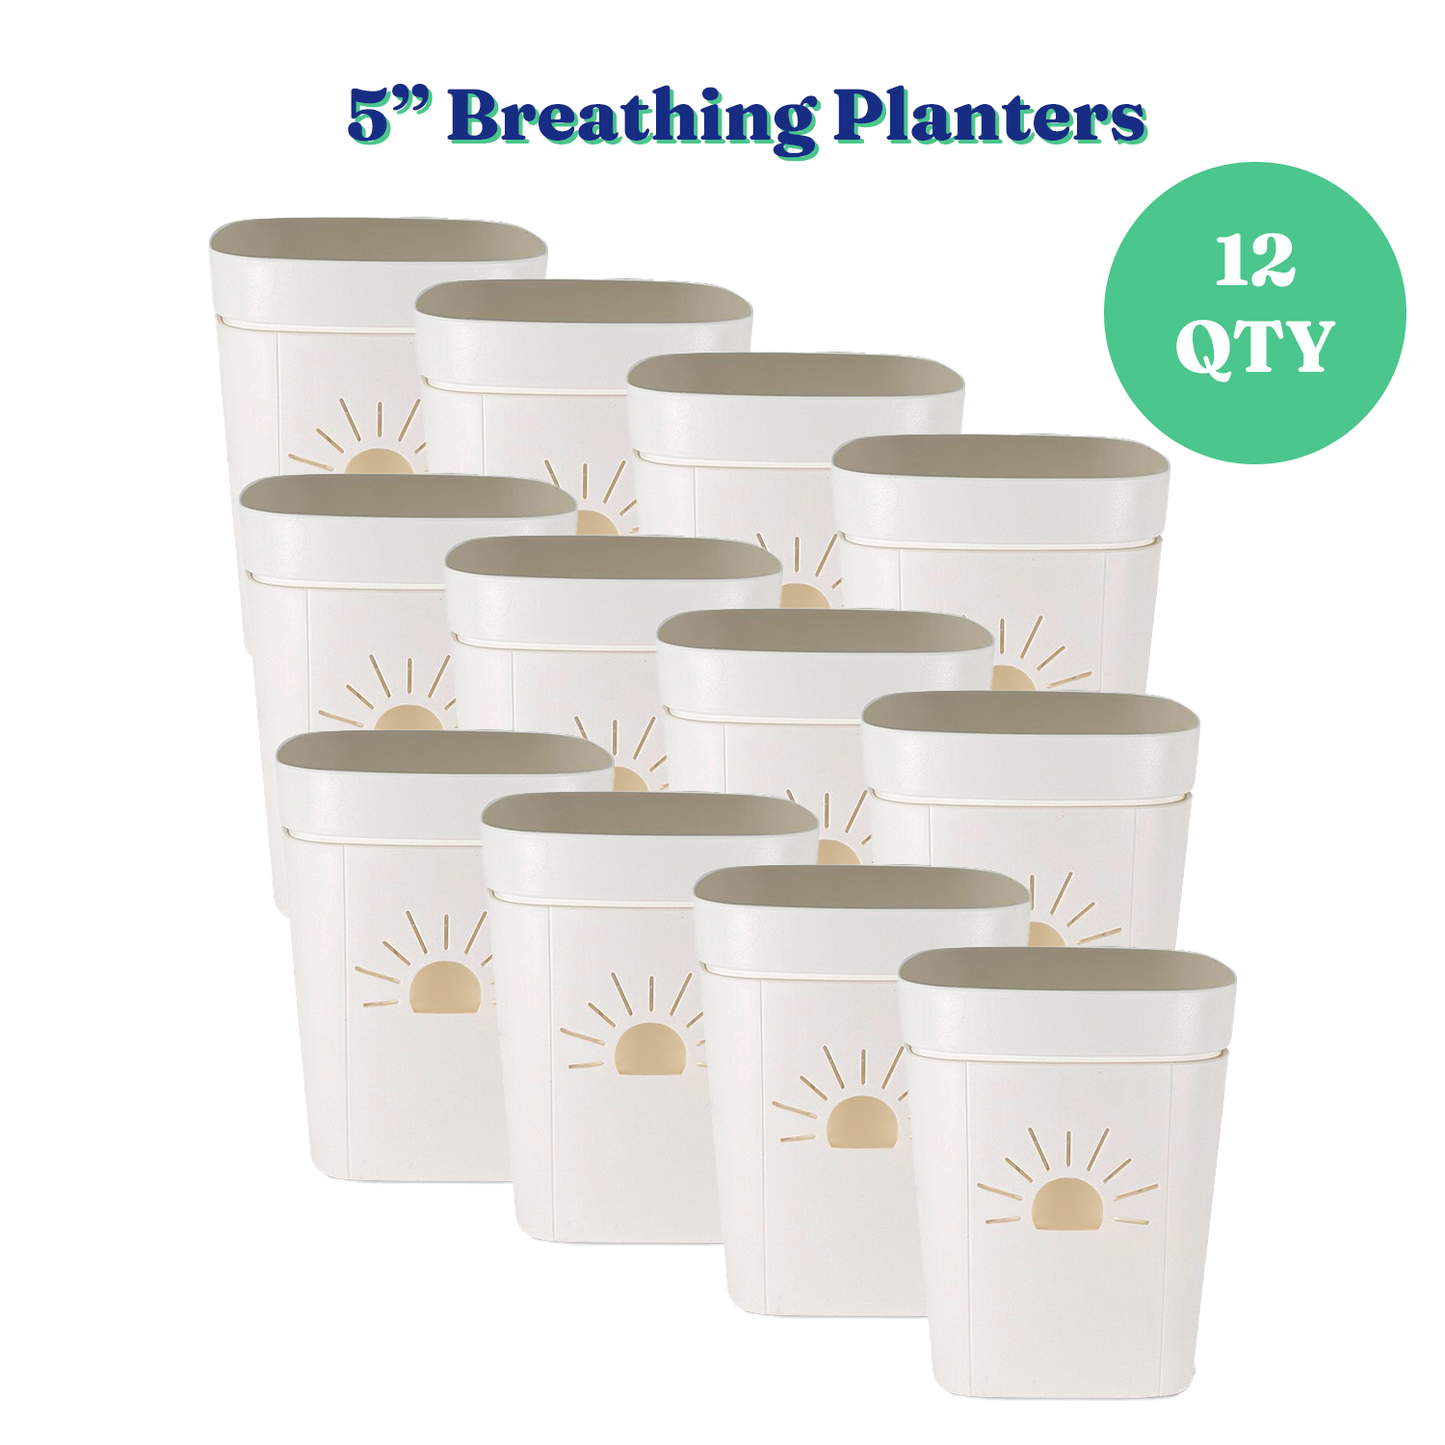 5-Inch "Breathing" Planter